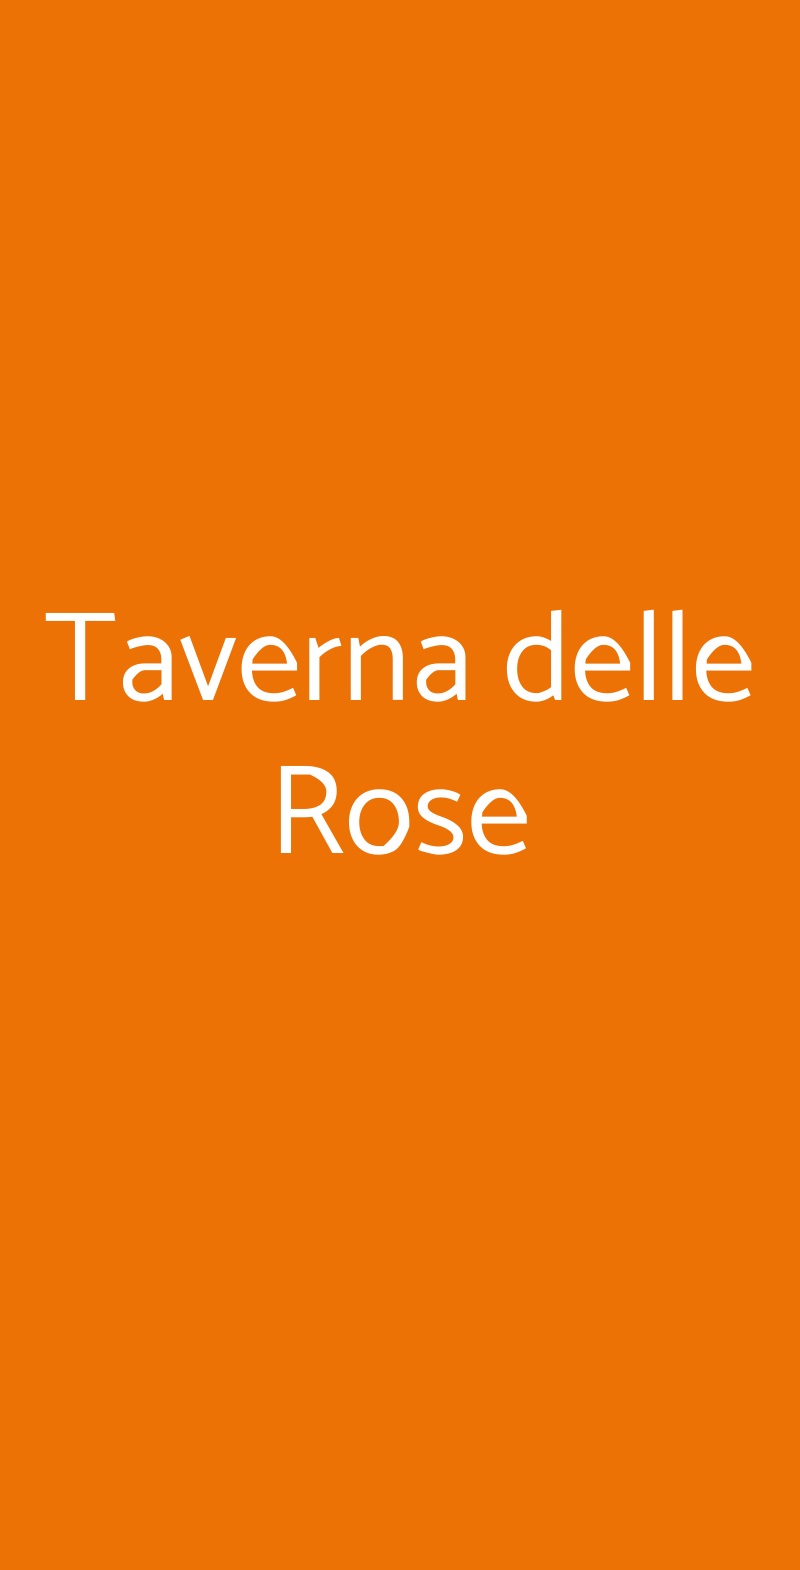 Taverna delle Rose Torino menù 1 pagina